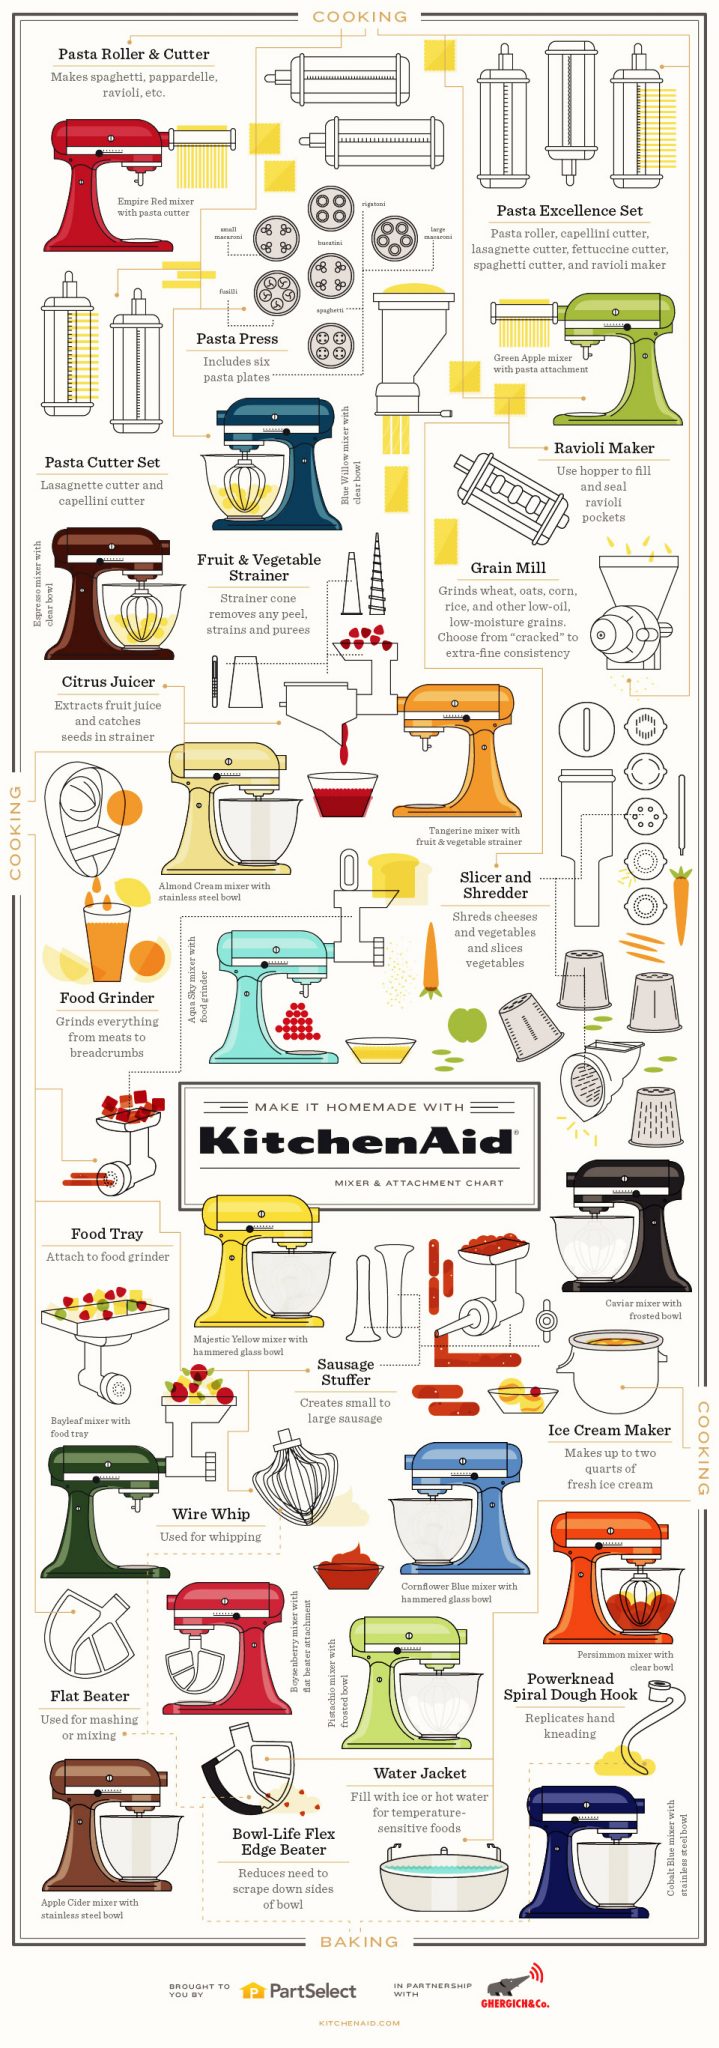 KitchenAid-Infographic